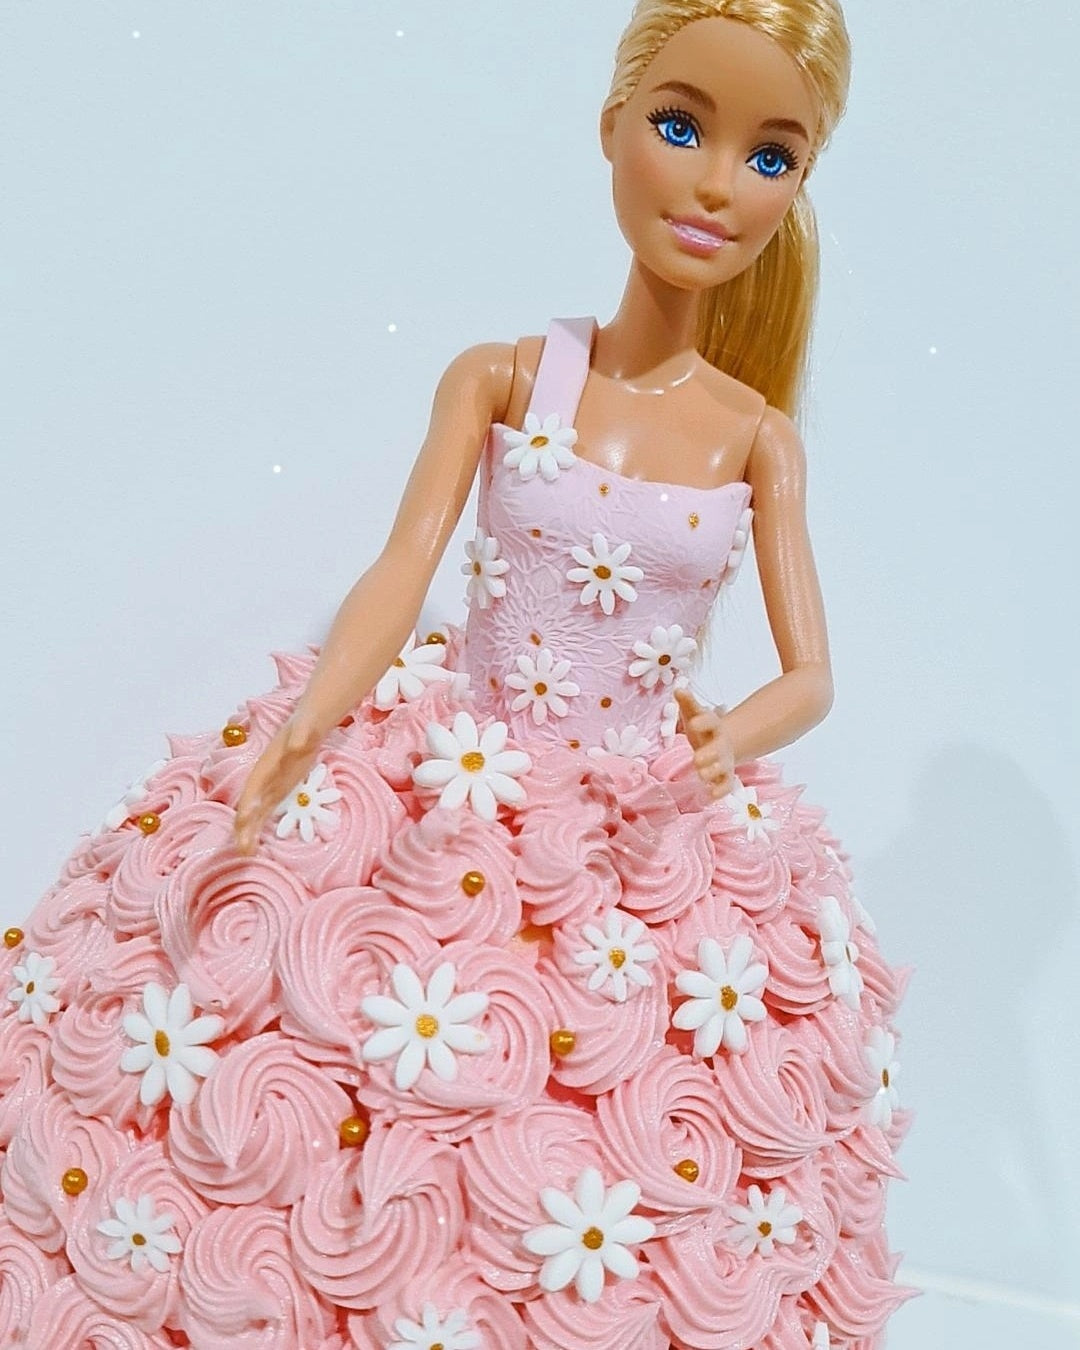 How to Make a Barbie Cake - Family Spice